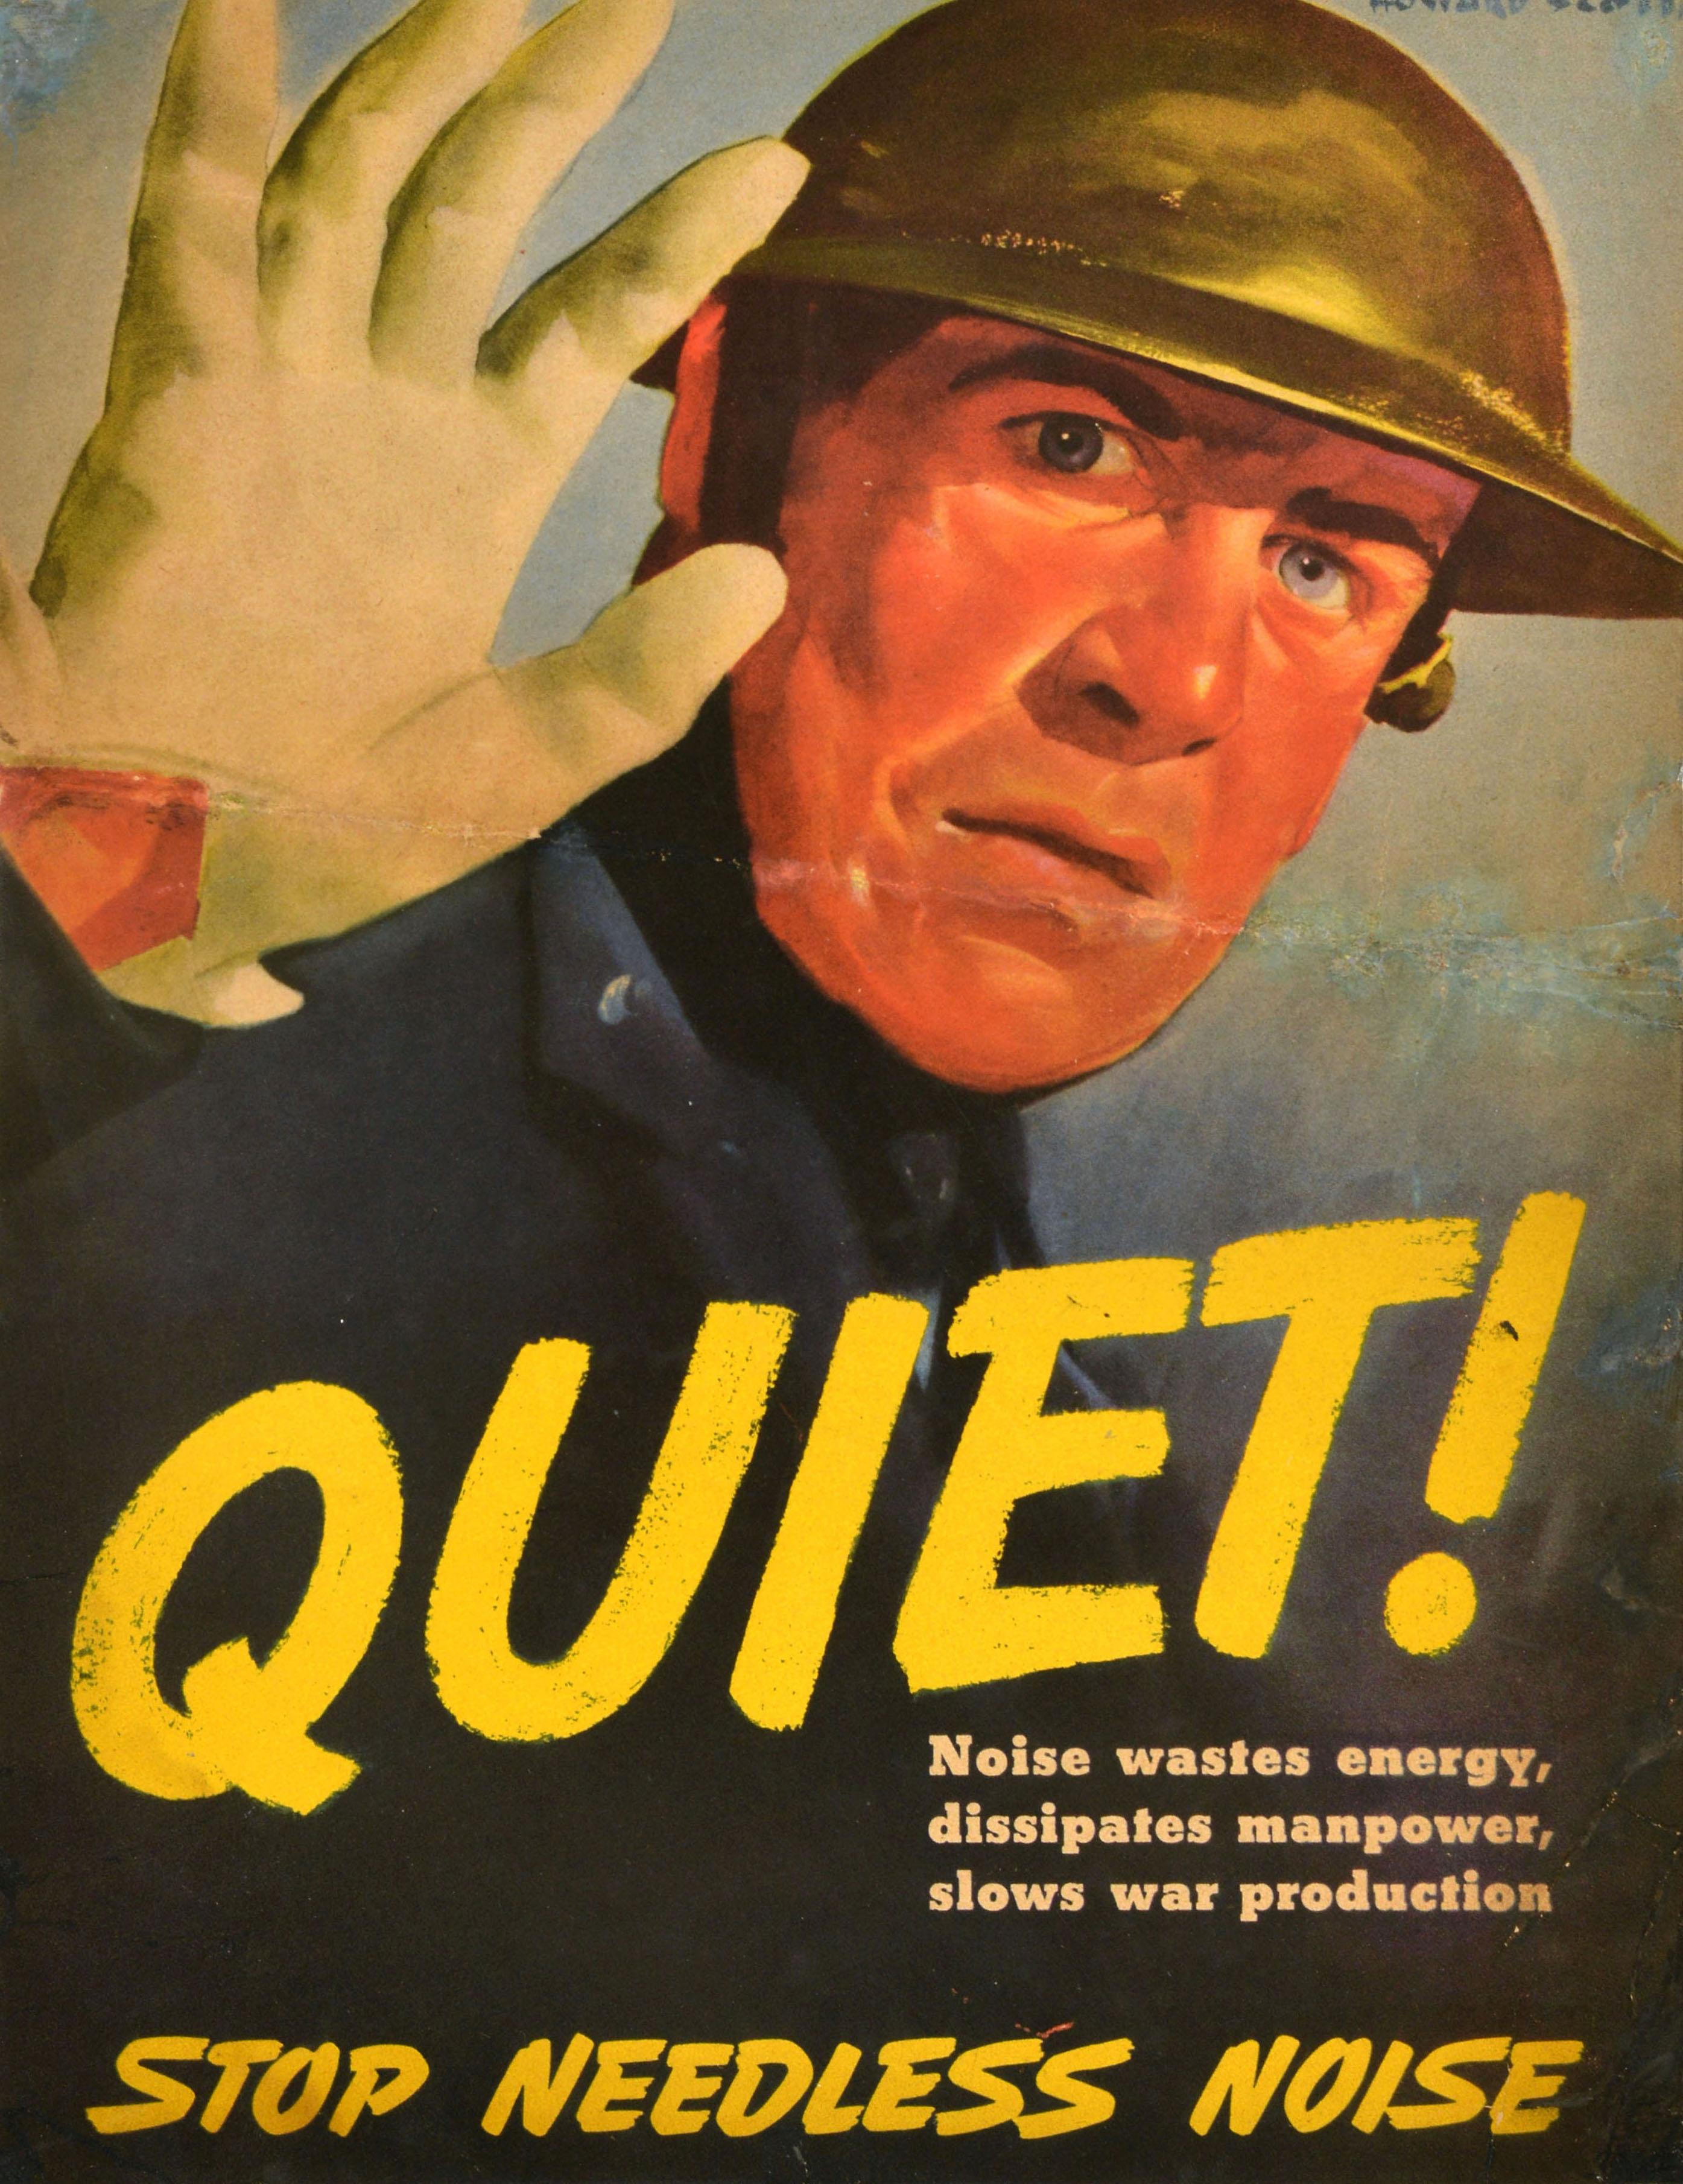 Original Vintage War Propaganda Poster Quiet Stop Needless Noise WWII Soldier